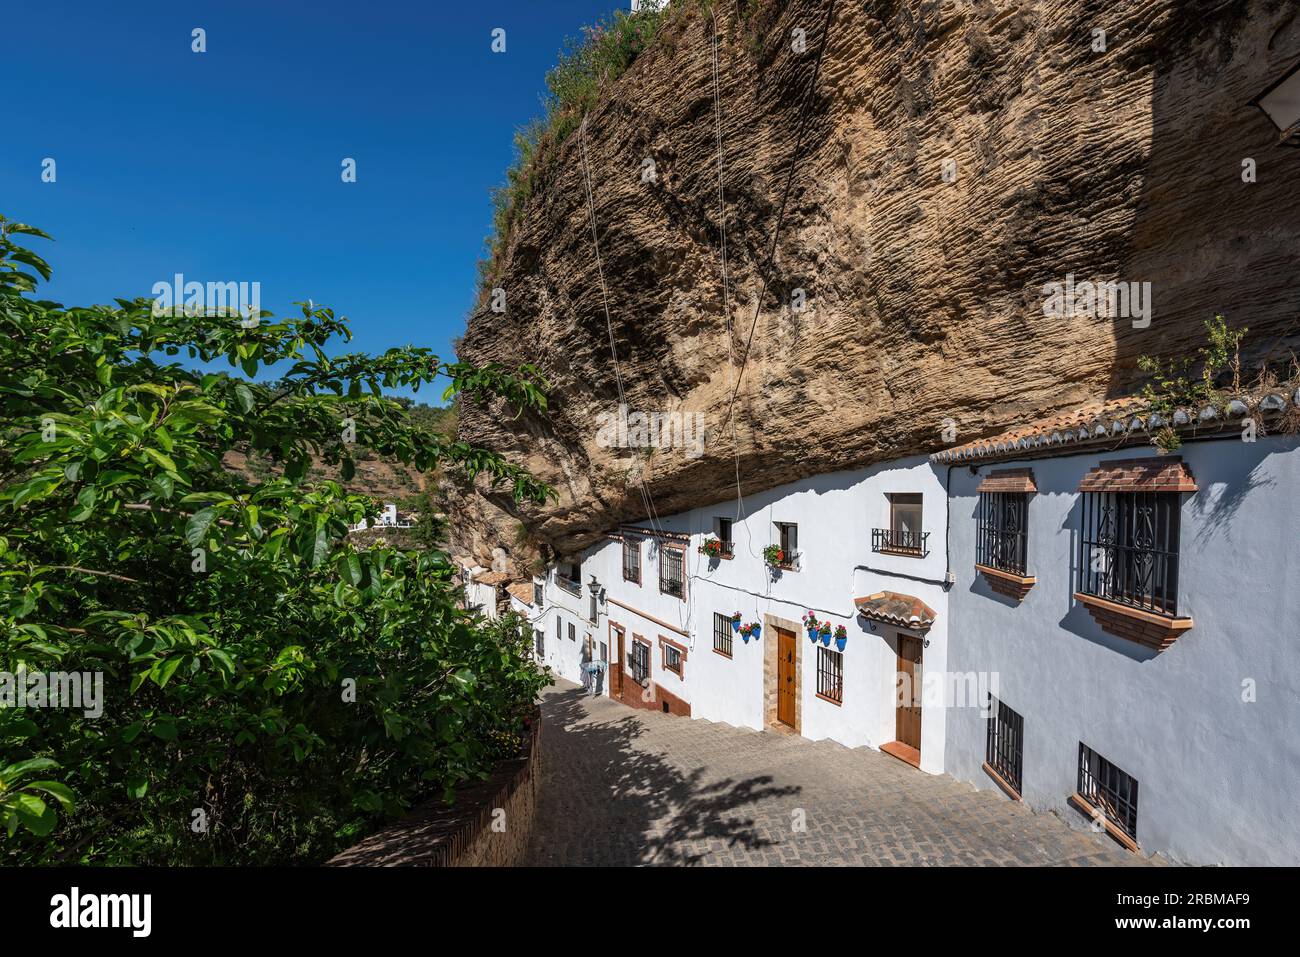 Calle Calcetas Street with Rocks dwellings - Setenil de las Bodegas, Andalusia, Spain Stock Photo